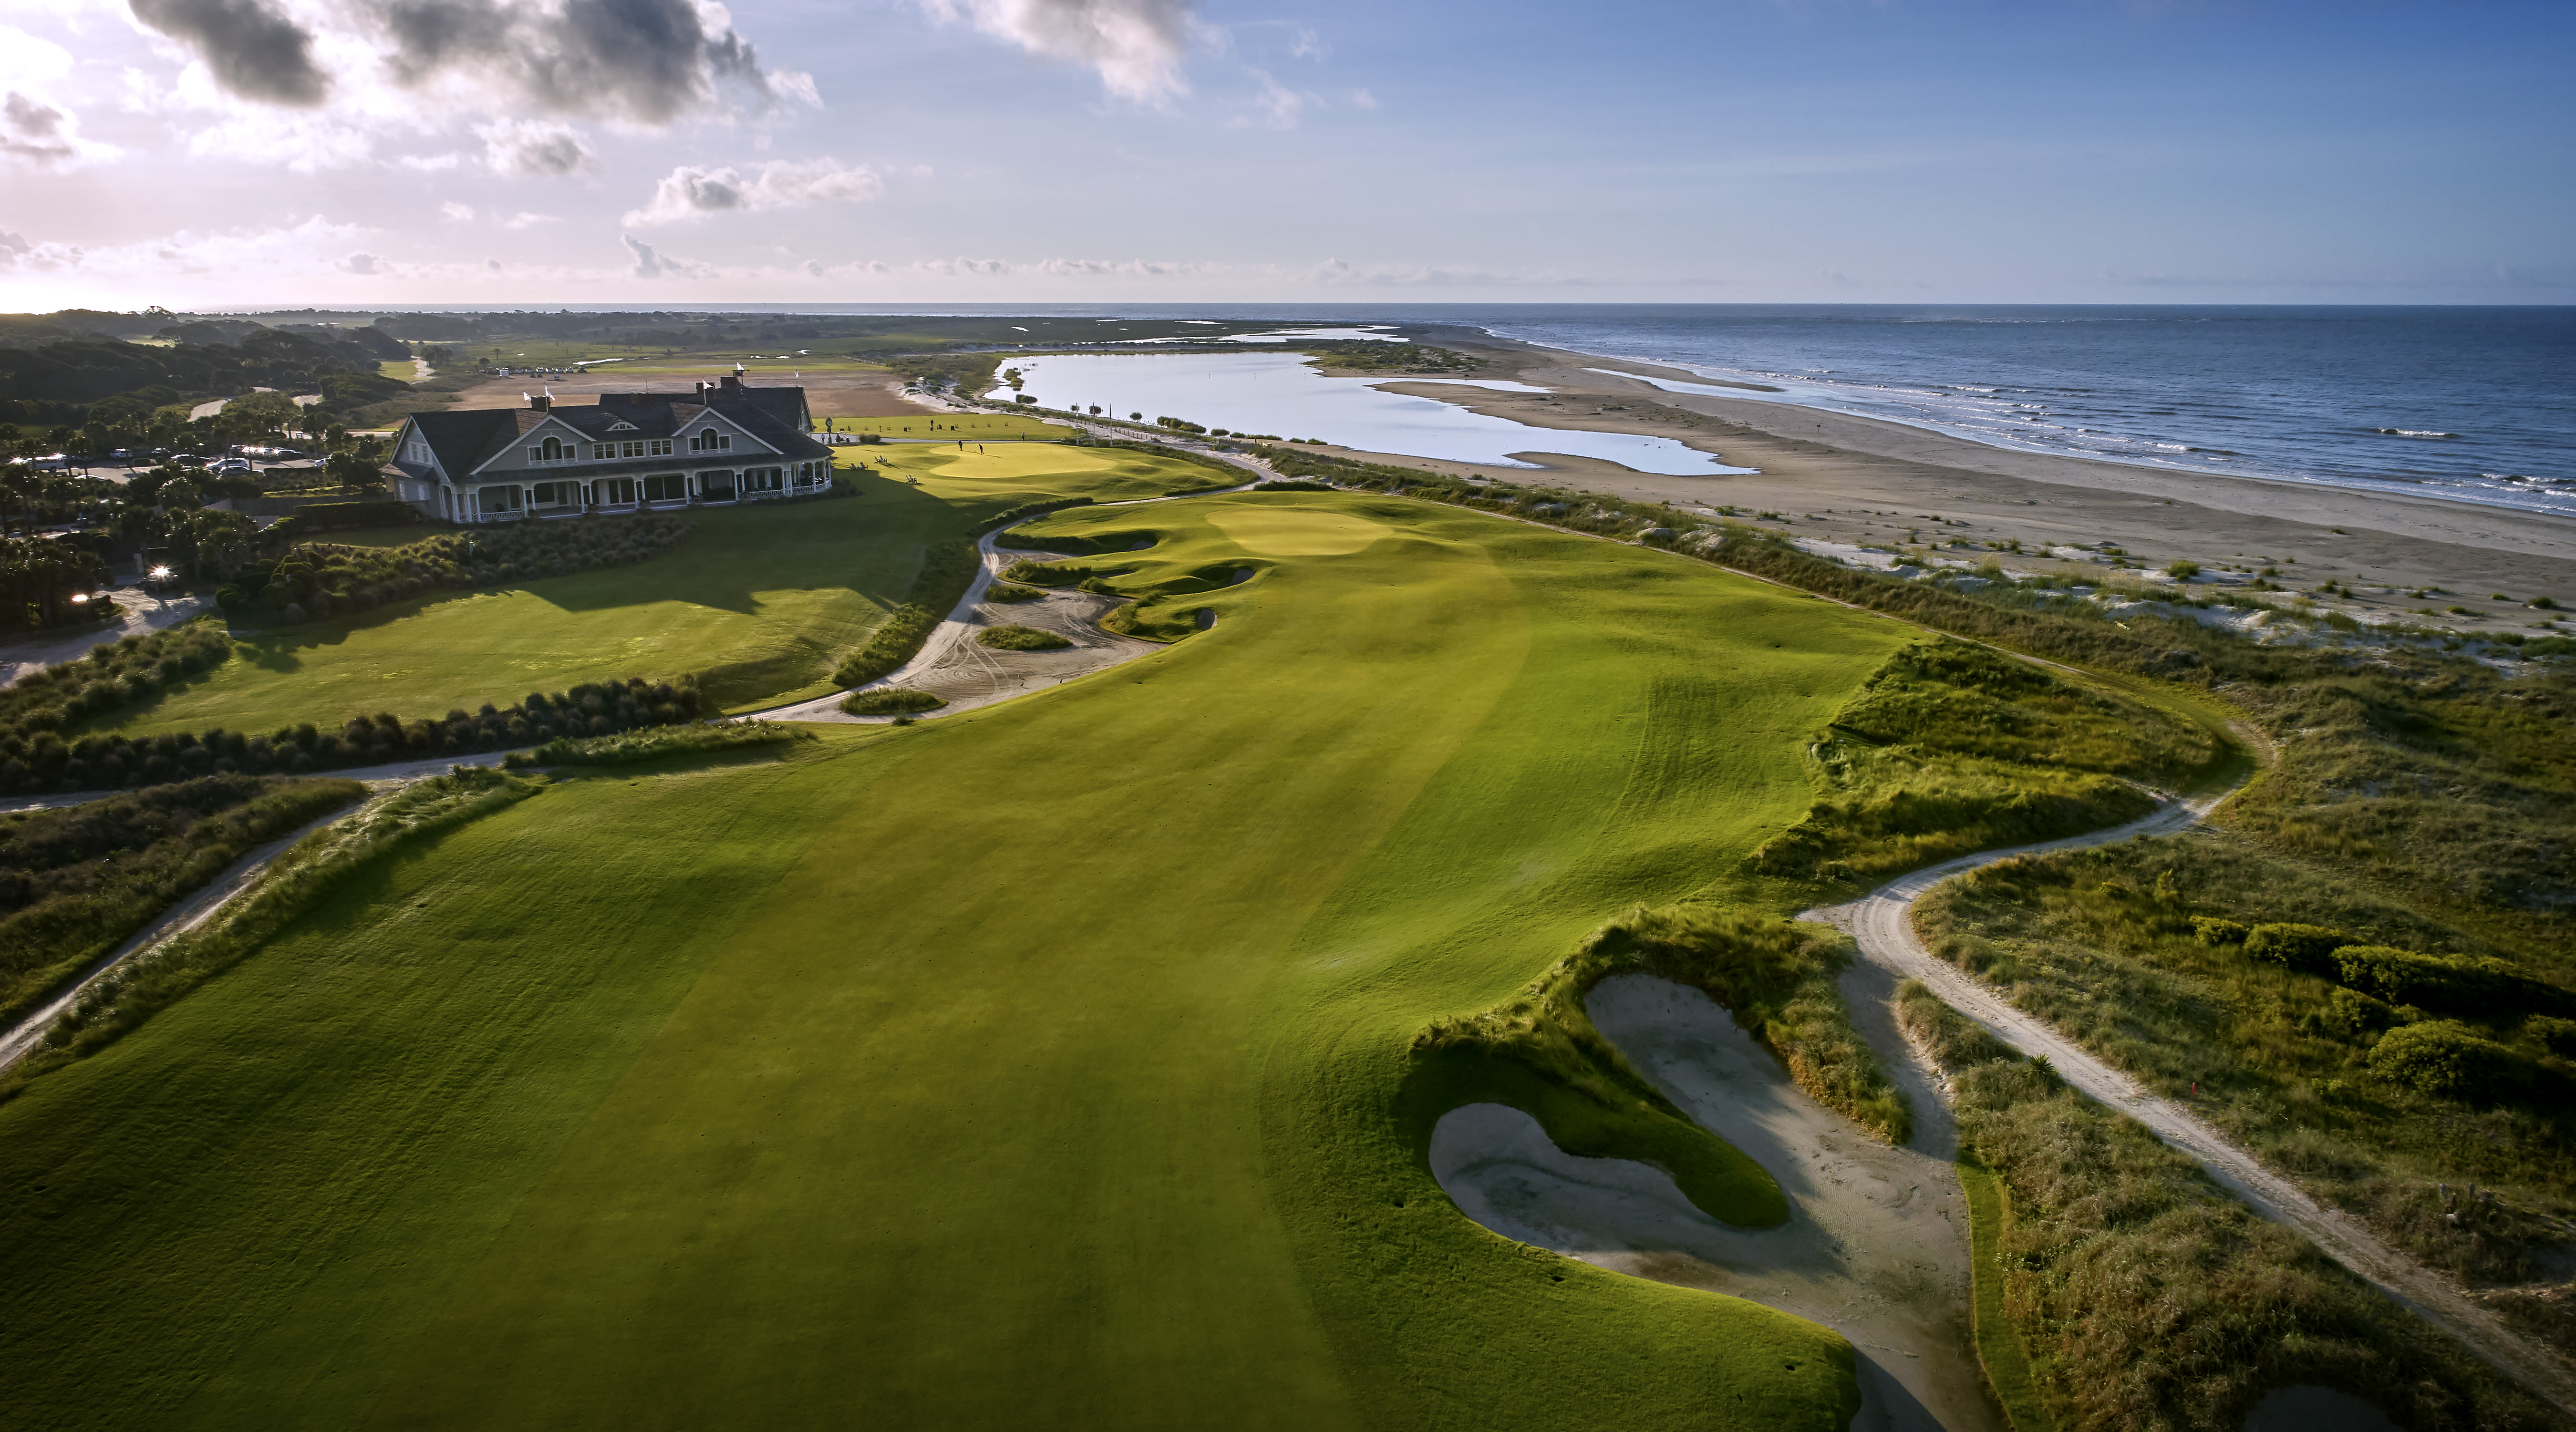 Image: Golf fairway with ocean in background